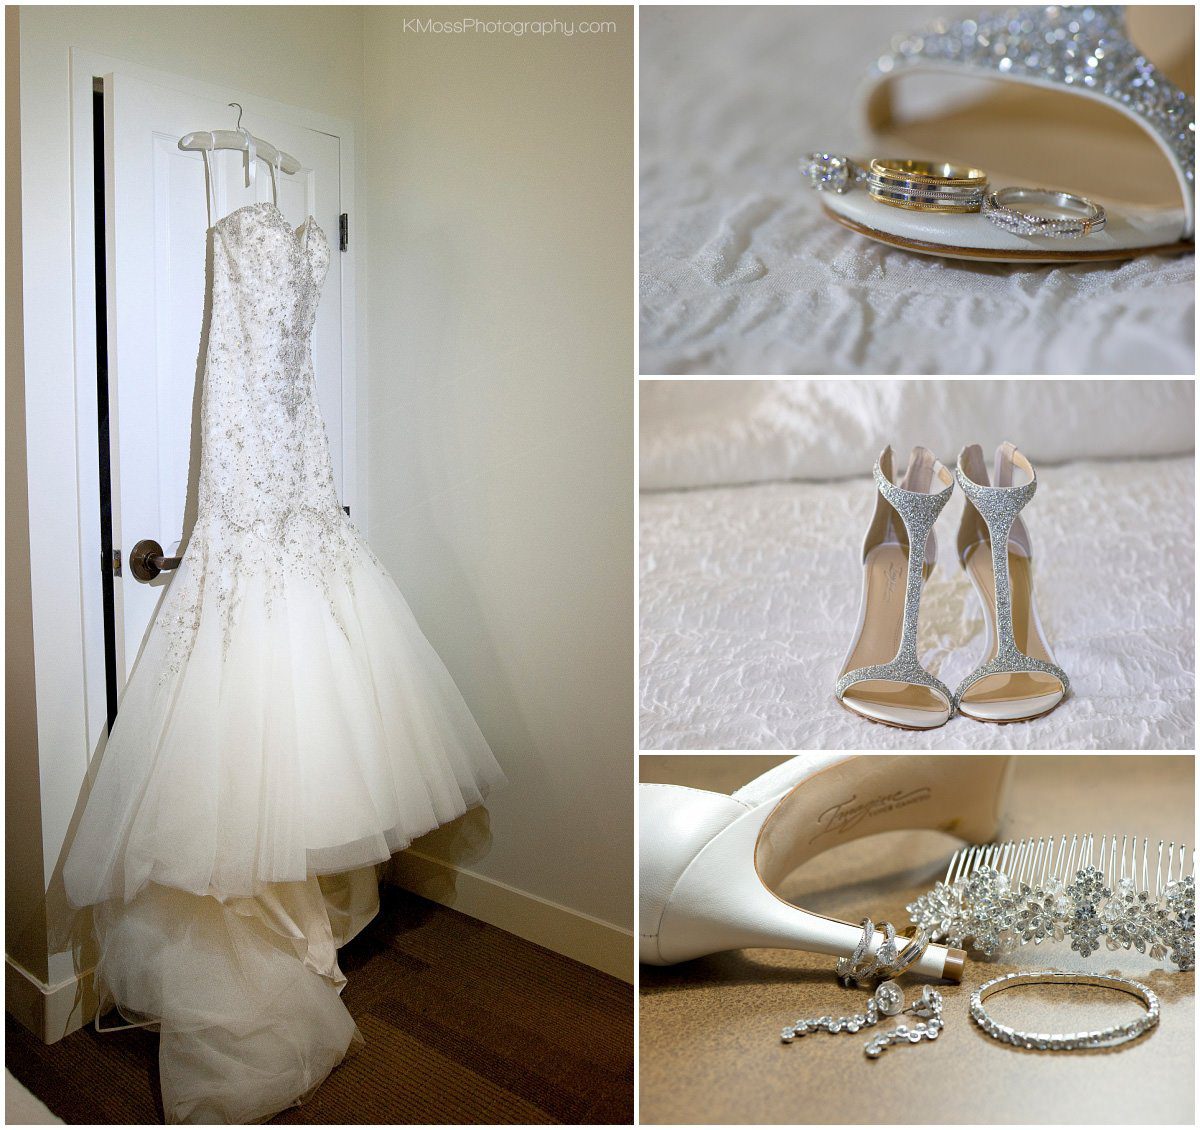 Bride Wedding Details | K. Moss Photography